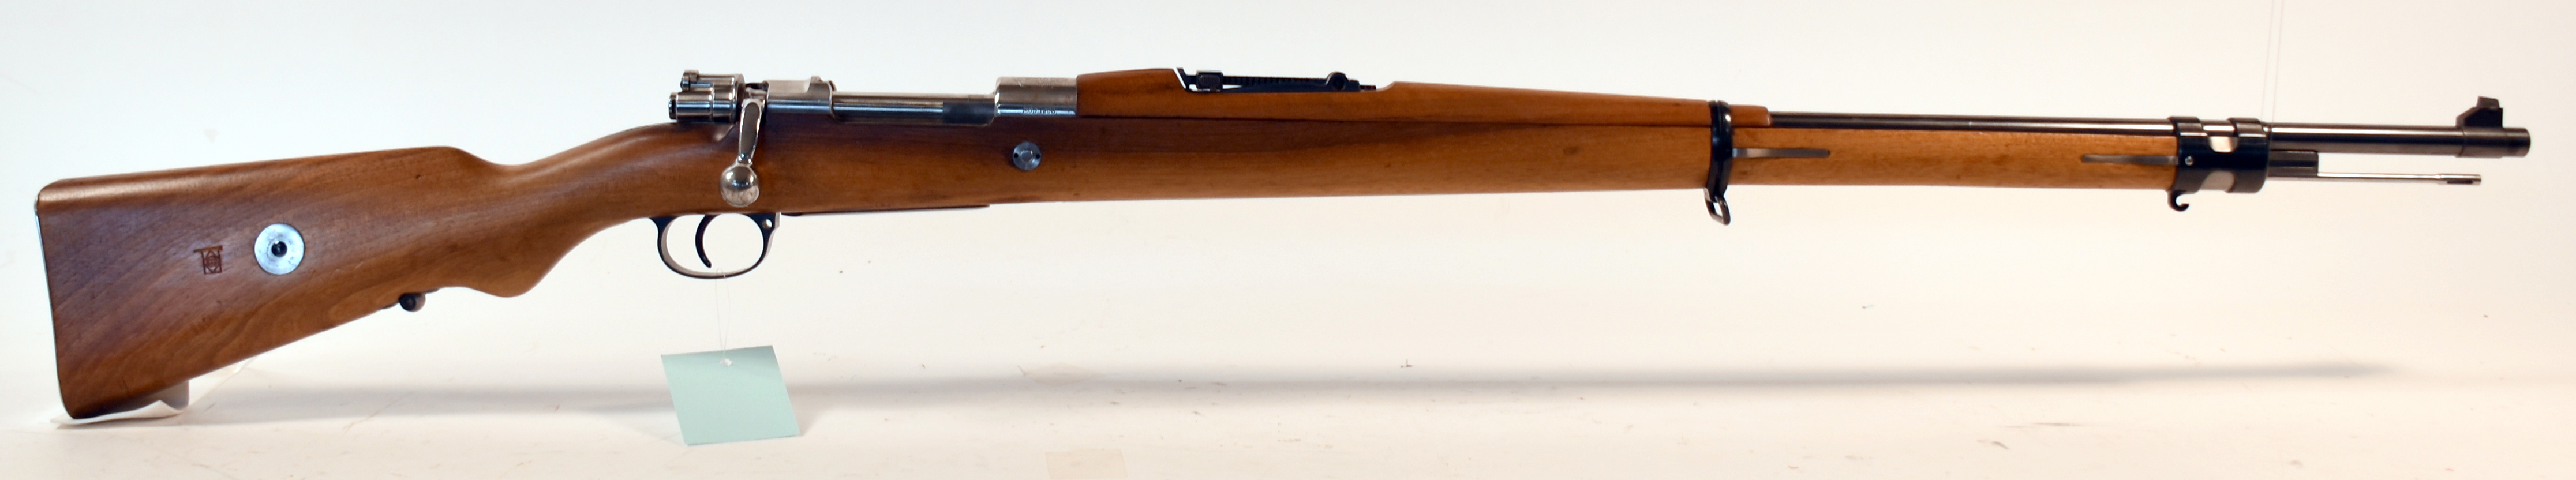 Описание объекта - Mauser 98, DWM, Mod. 